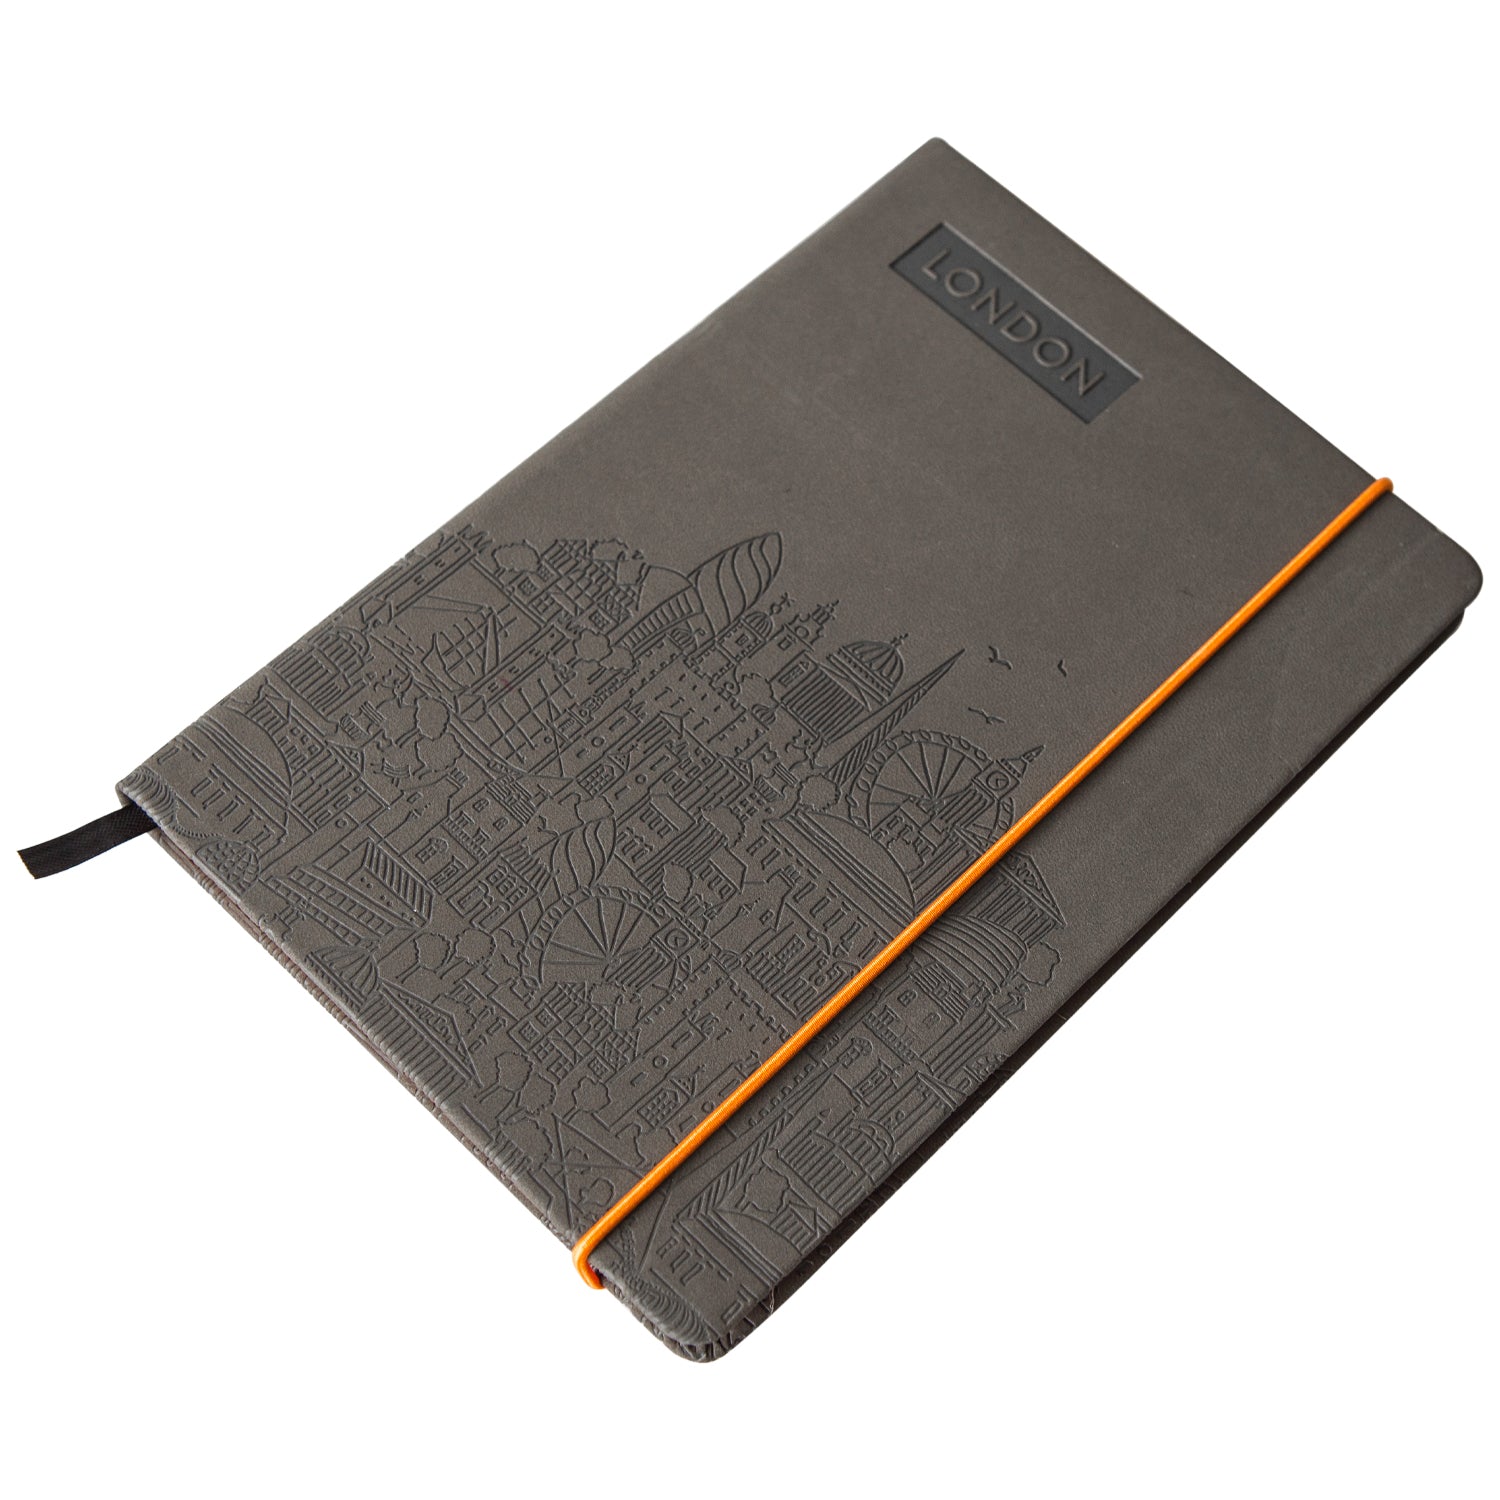 Sketch London A5 Notebook